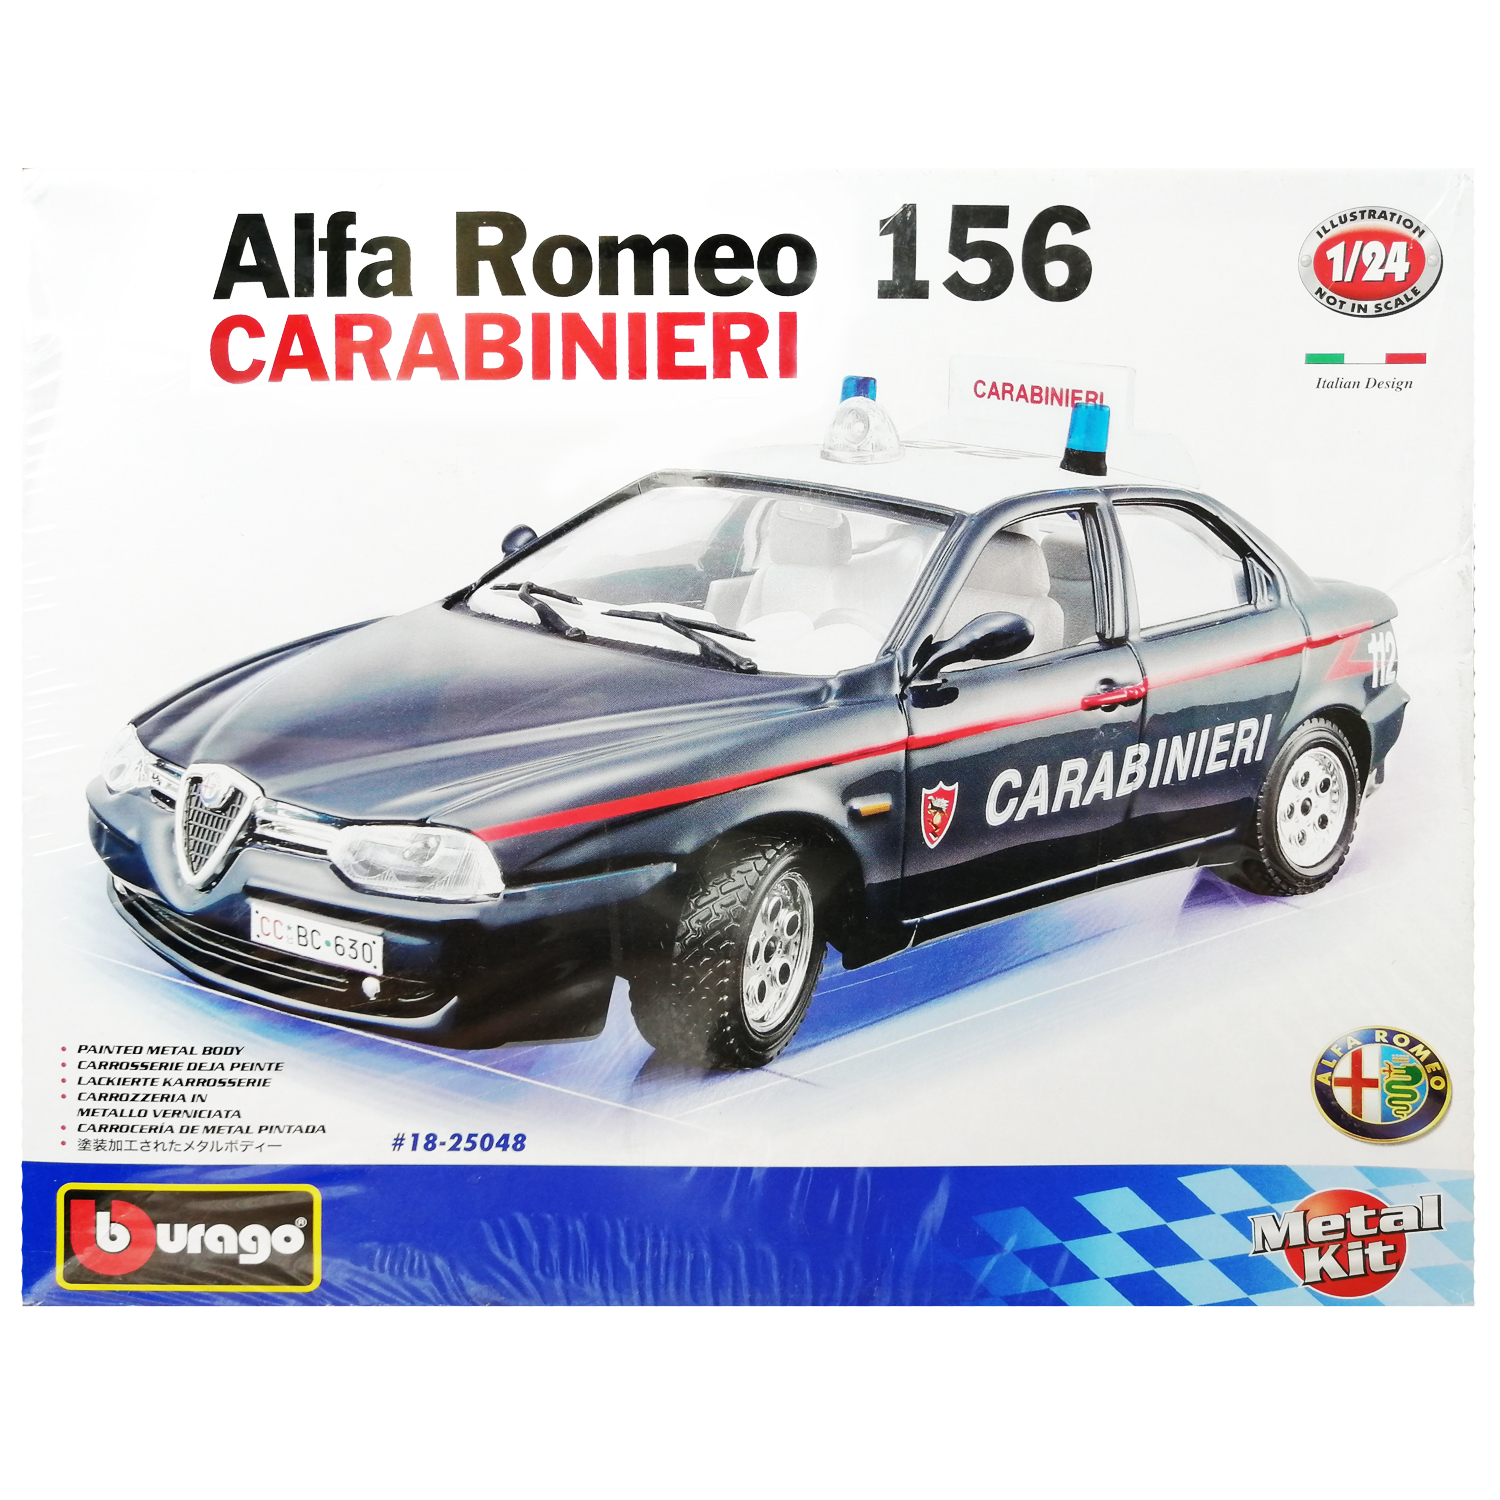 Сборная модель автомобиля, Bburago, Alfa Romeo 156 Carabinieri, масштаб 1:24, 18-25064